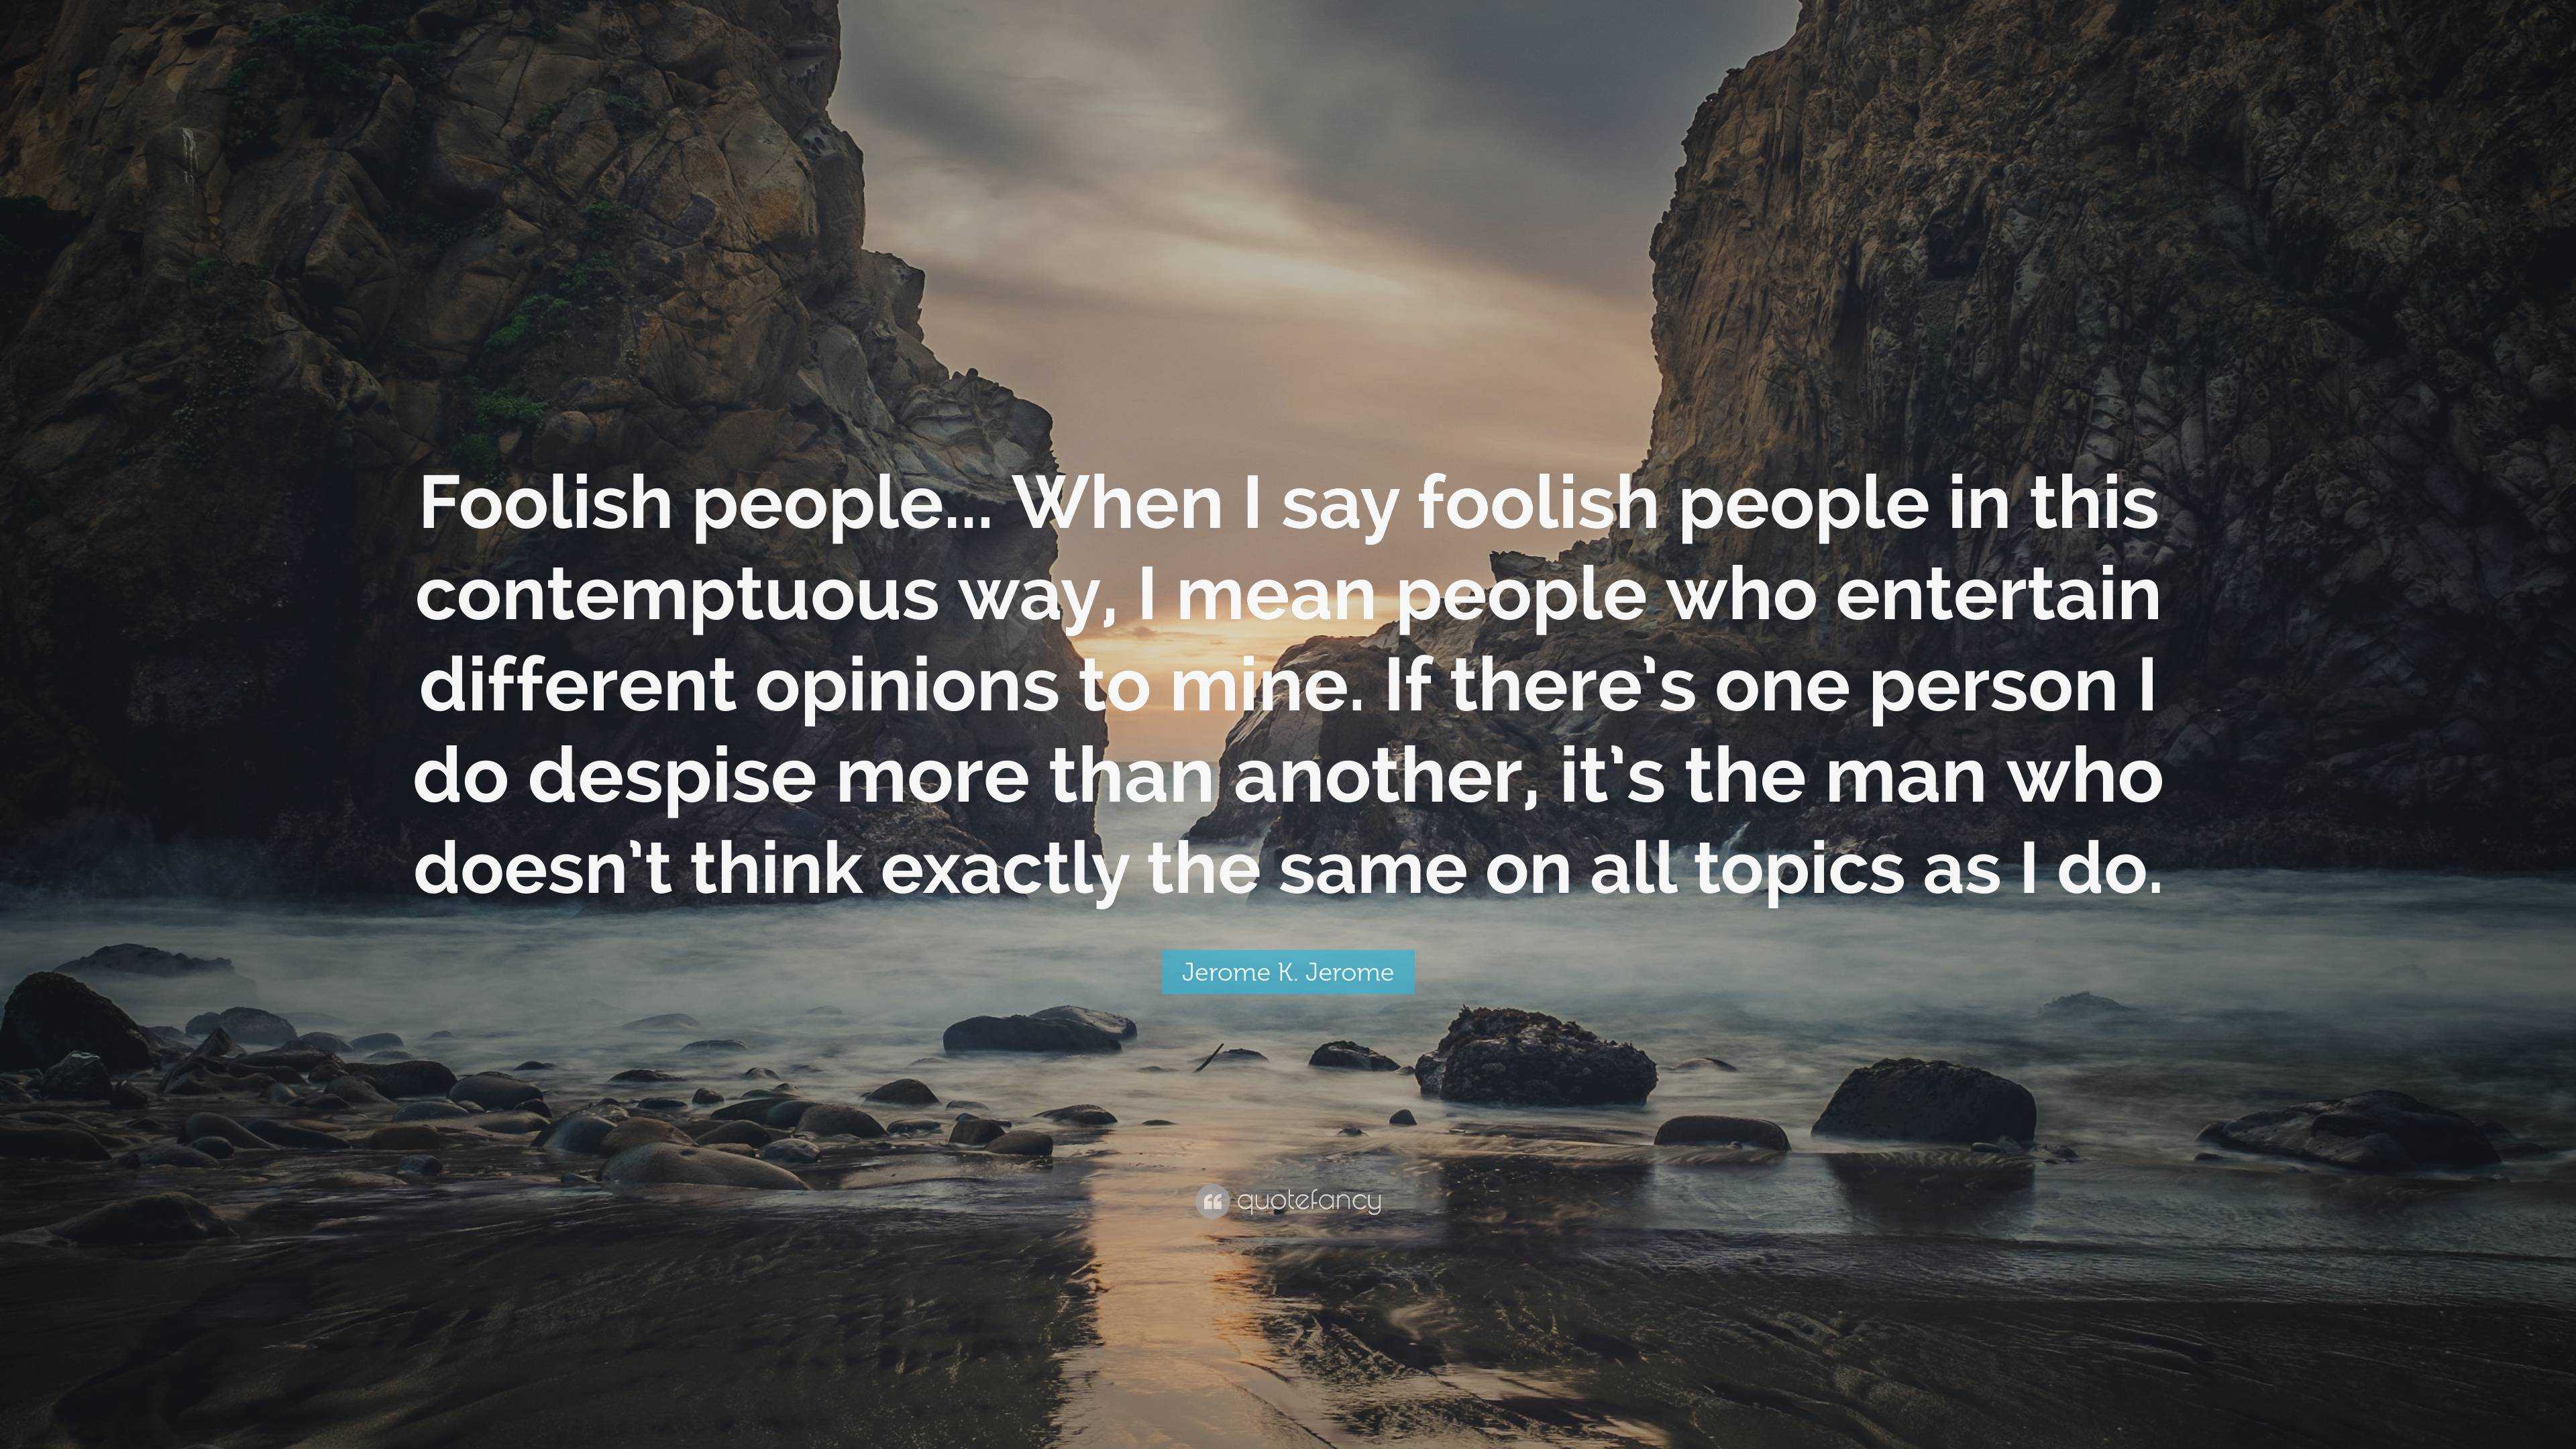 Jerome K. Jerome Quote: “Foolish people... When I say foolish people in ...